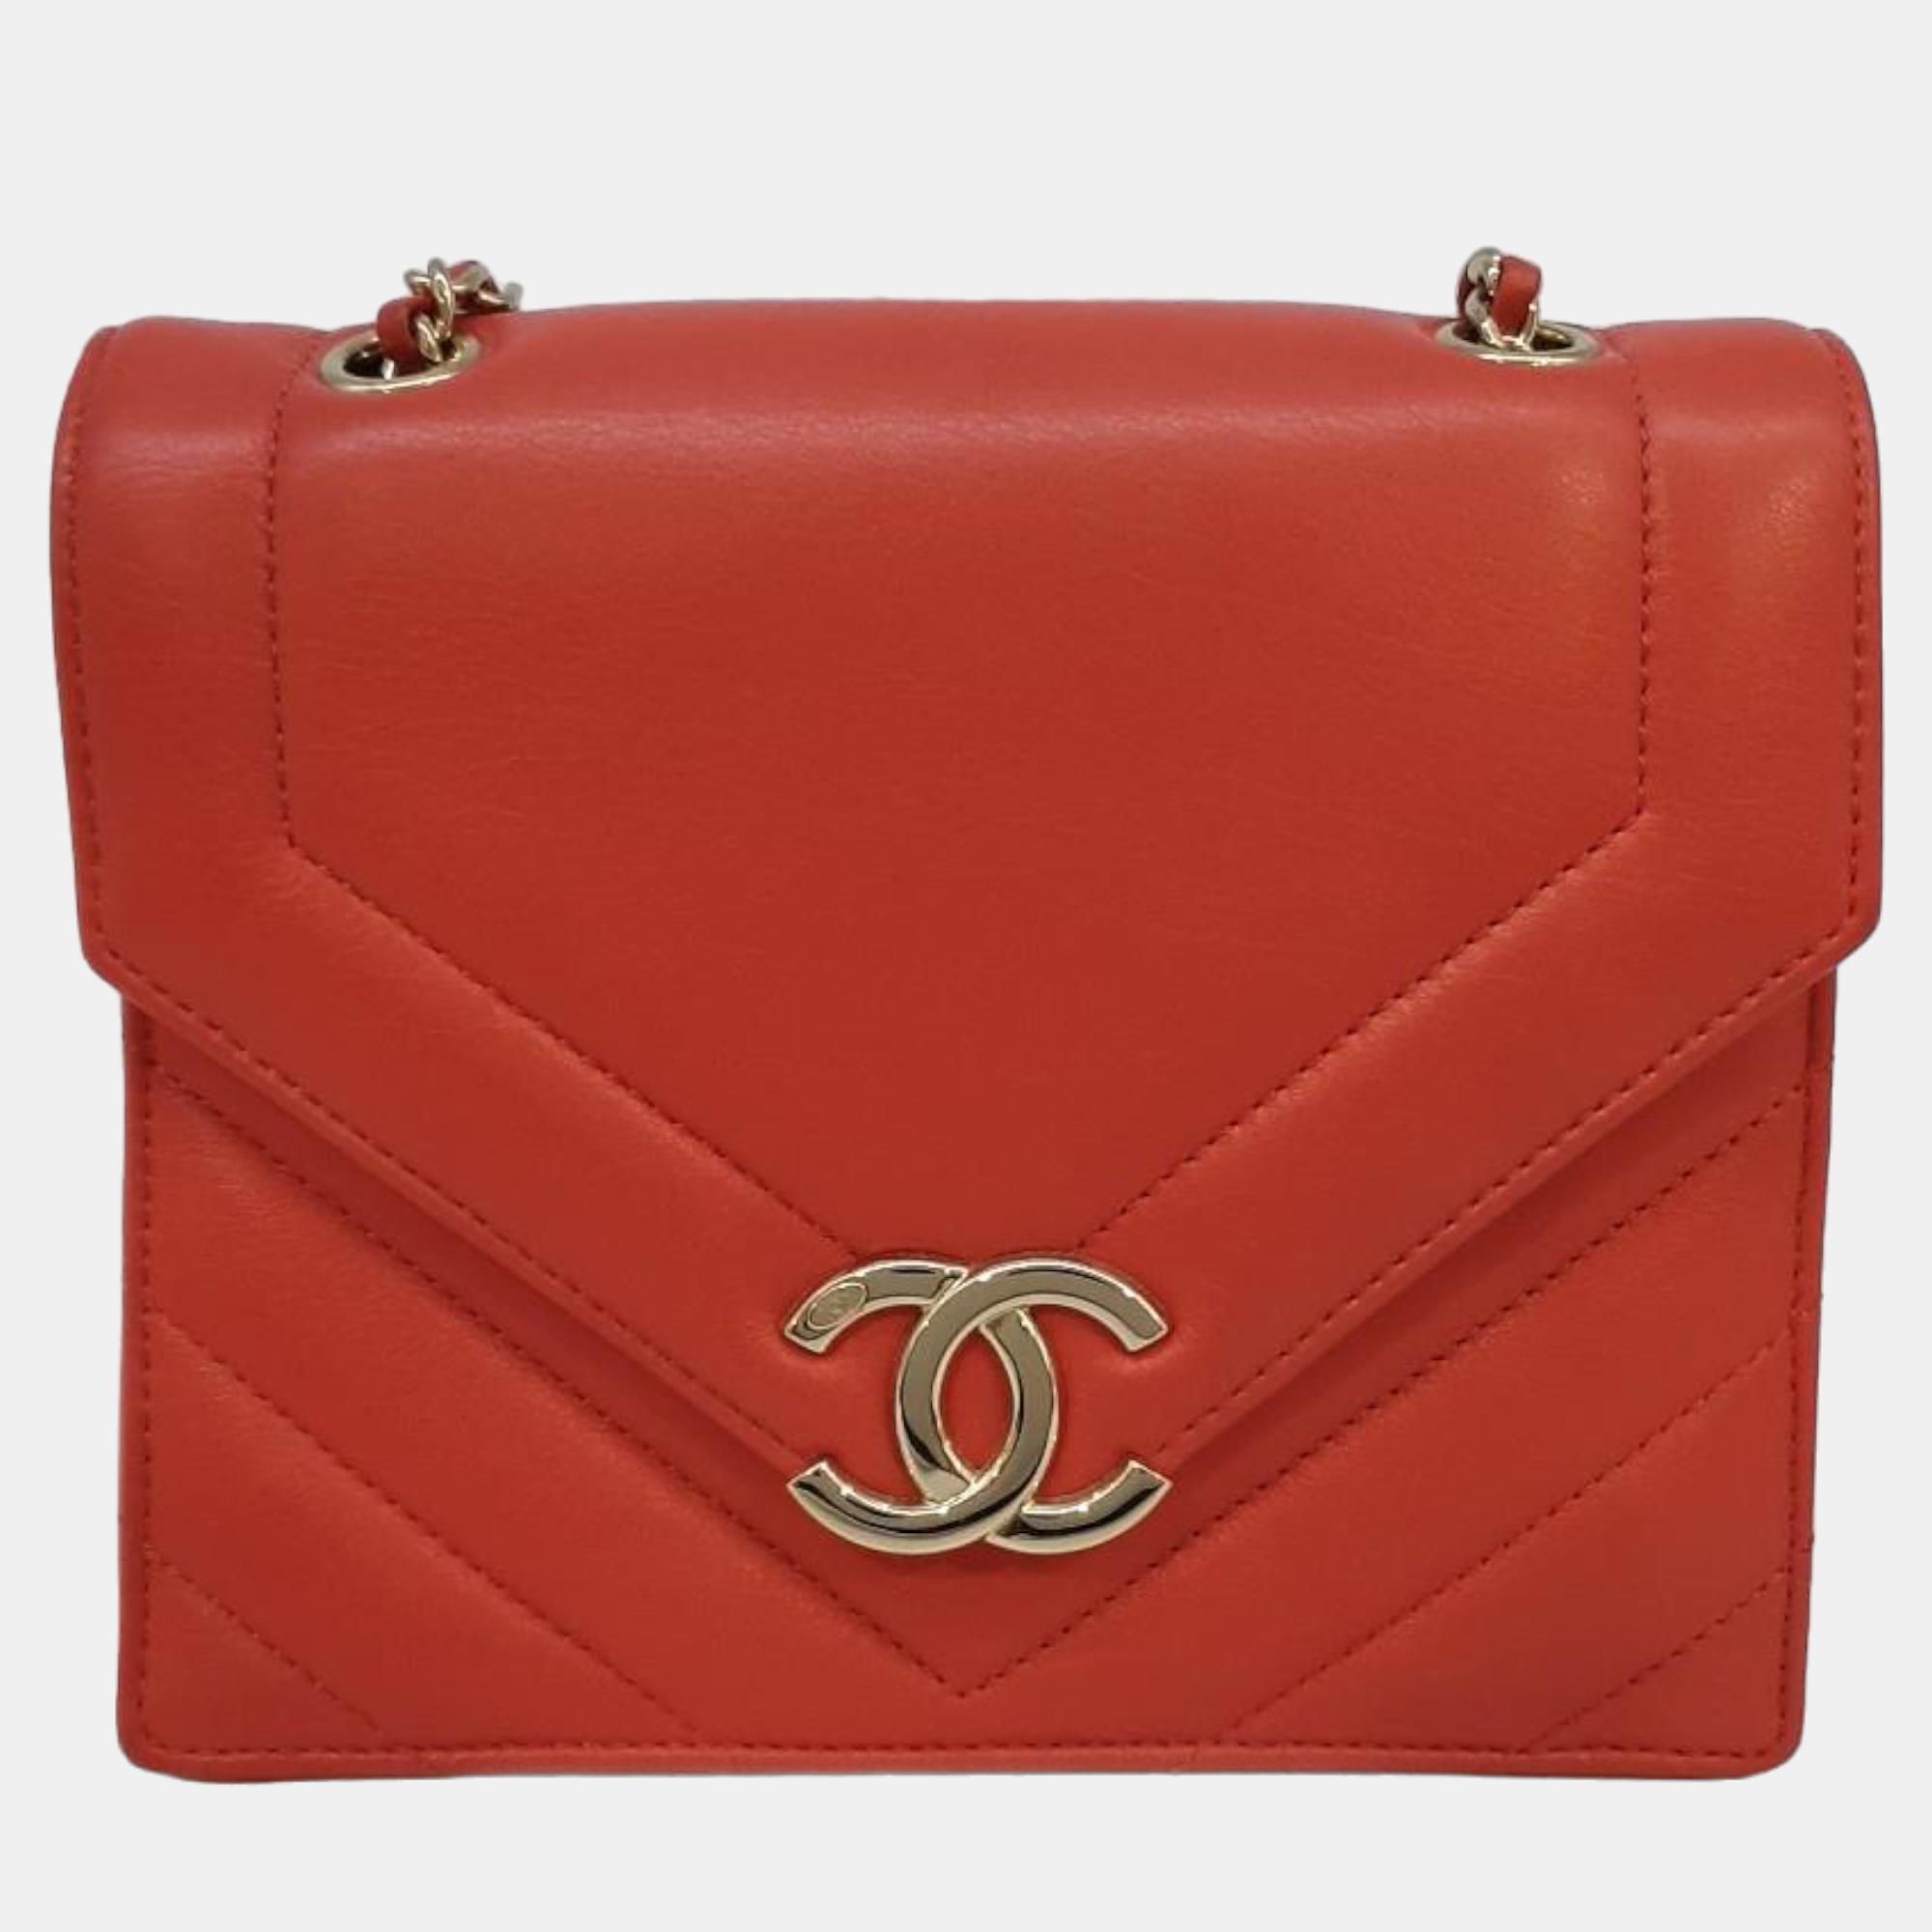 Chanel red chevron chain cross bag